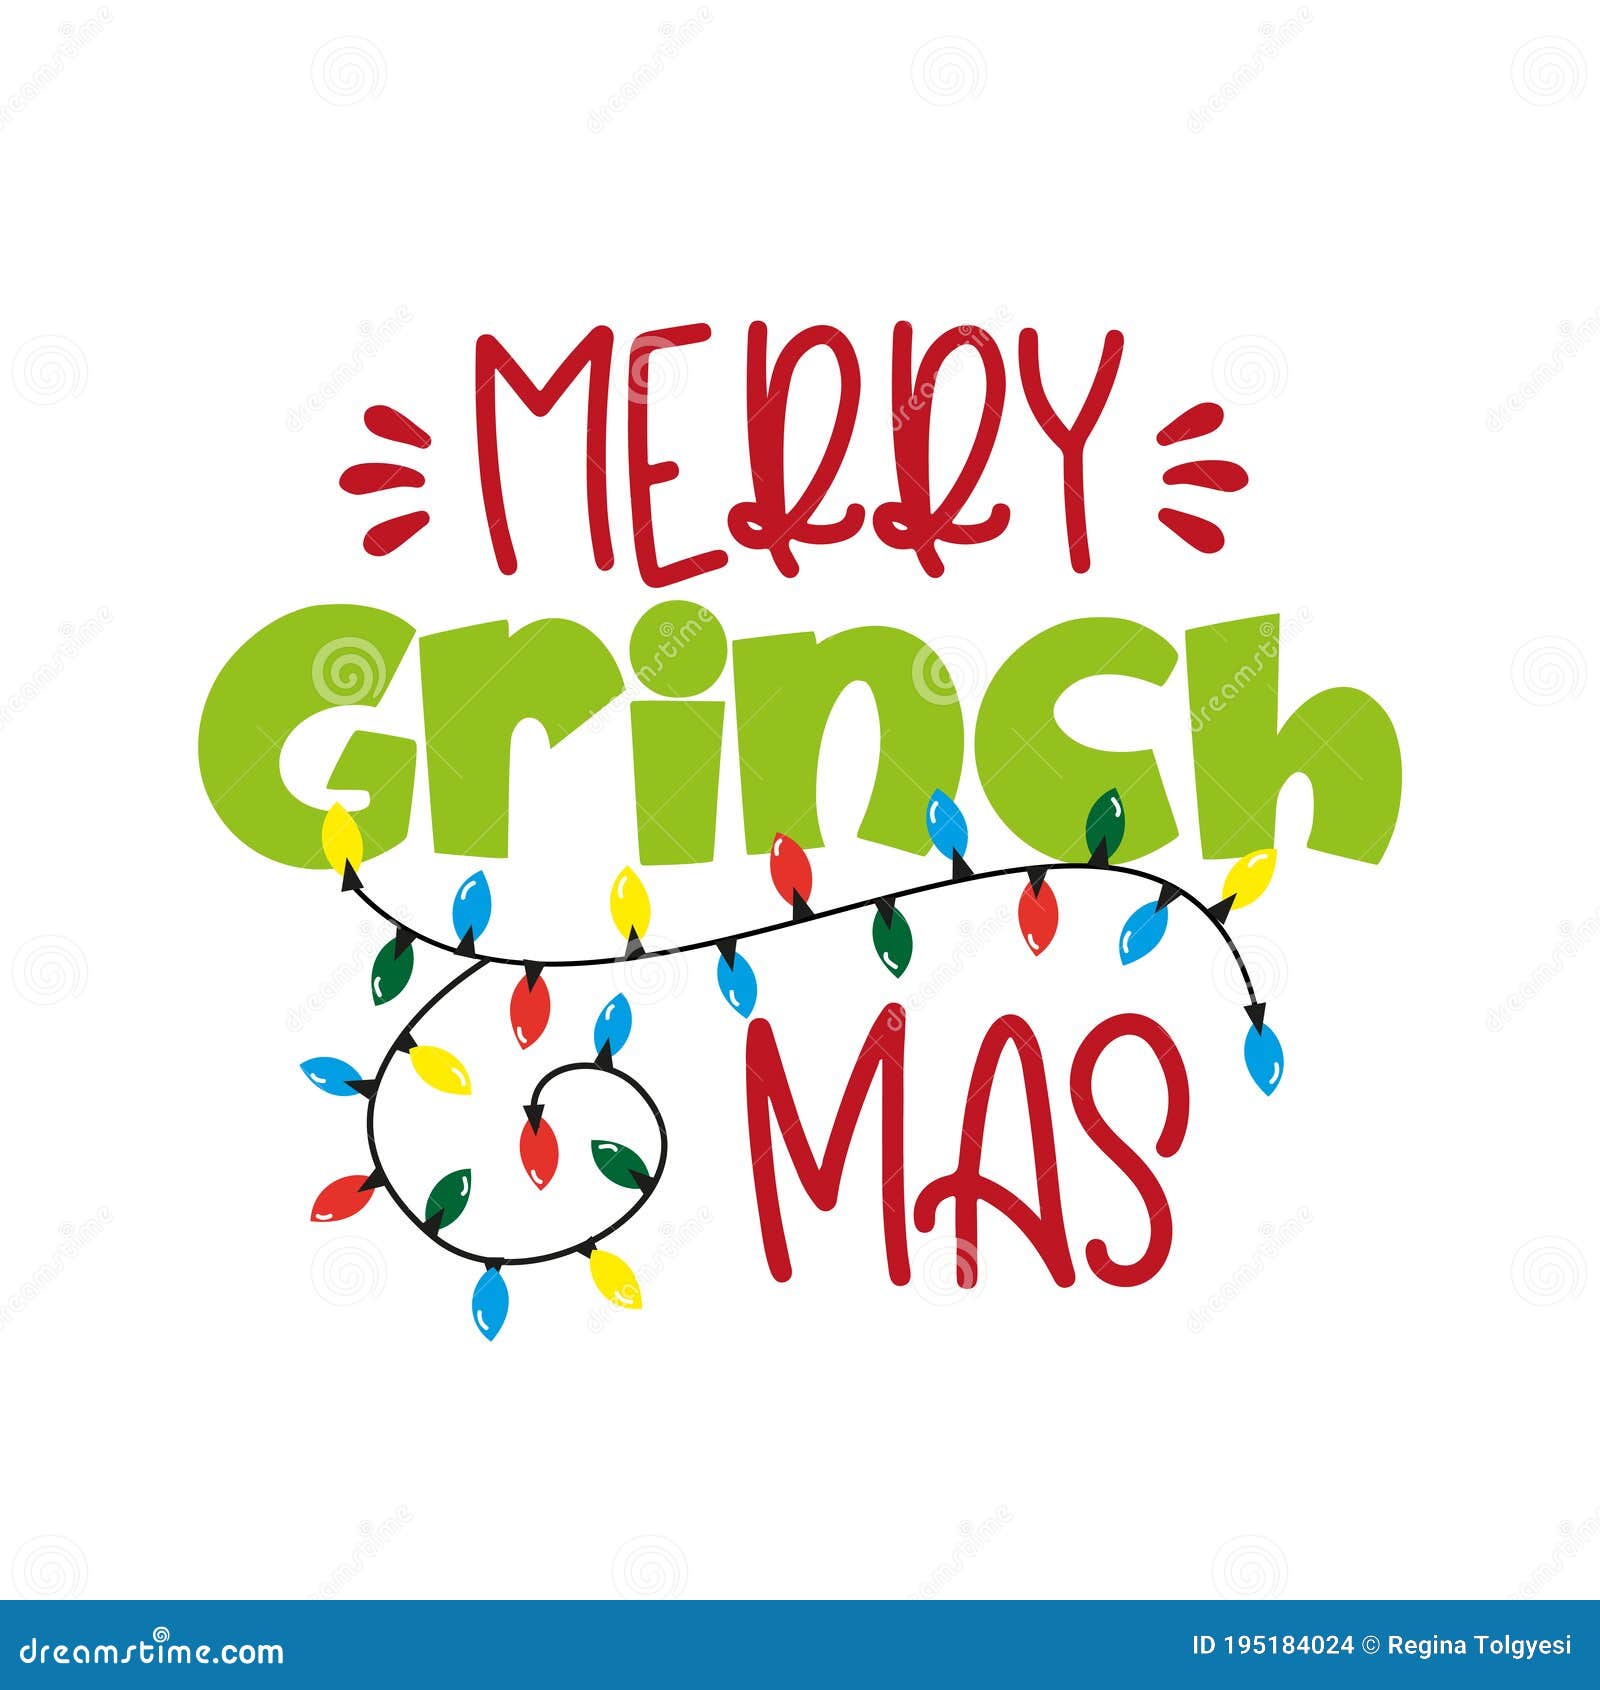 Merry Grinchmas Funny Christmas Greeting Vector